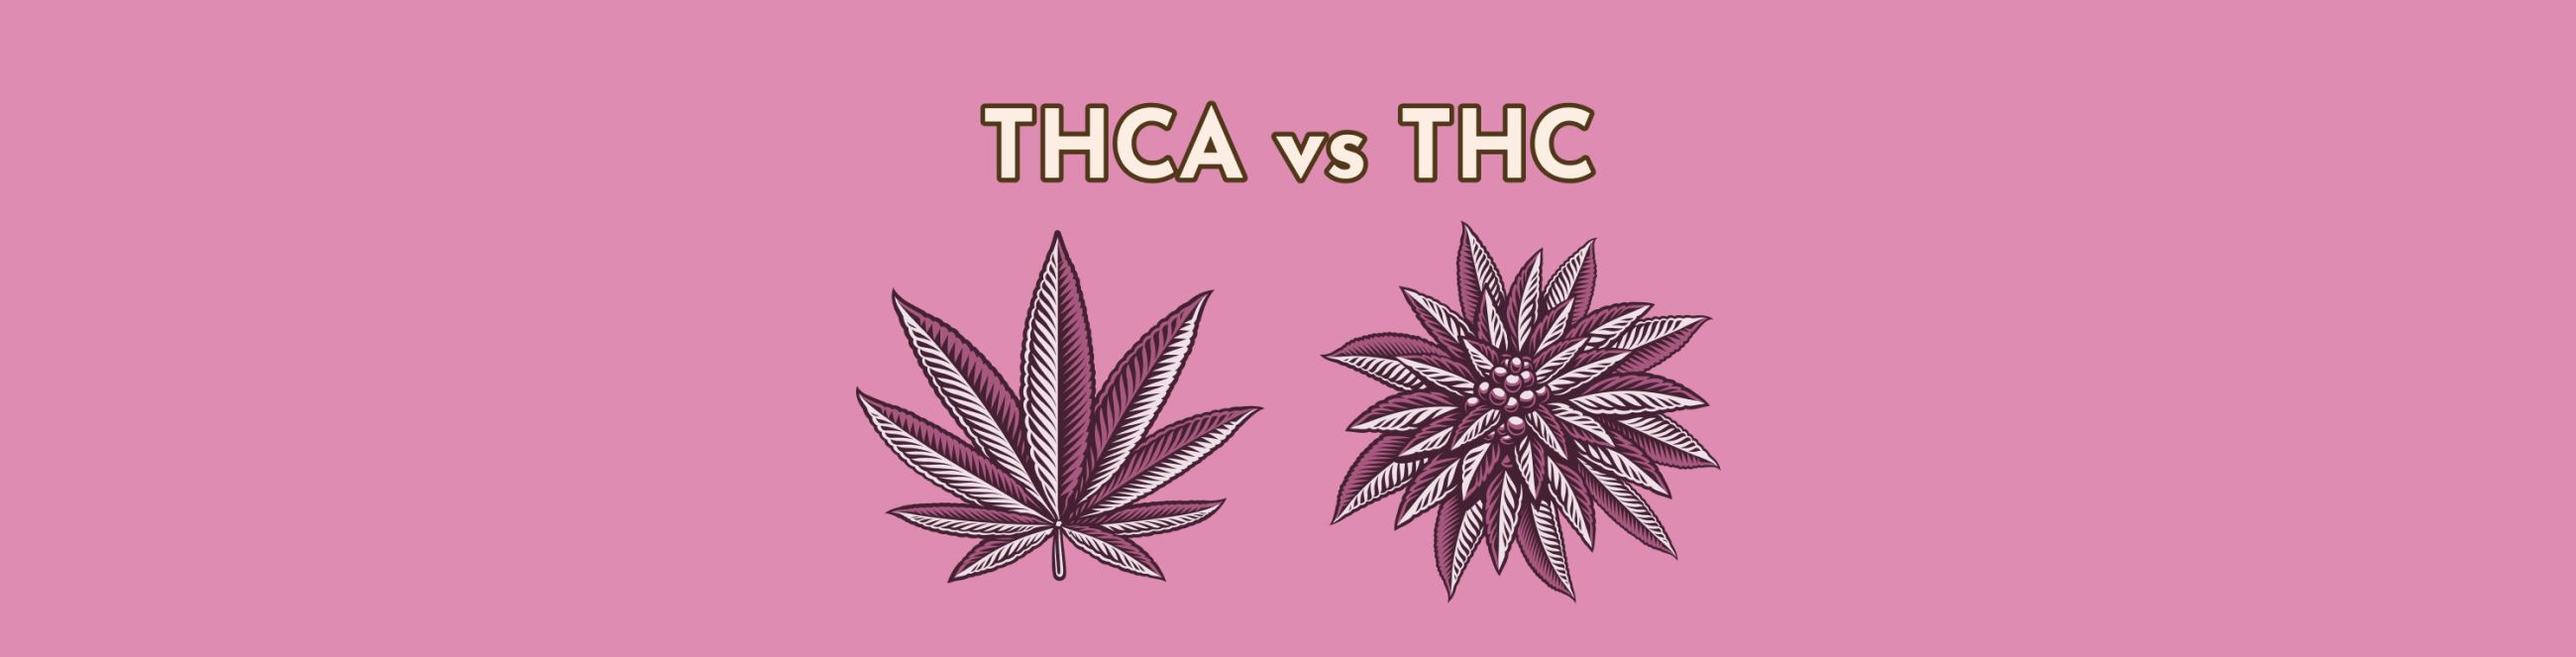 Understanding THCA vs THC